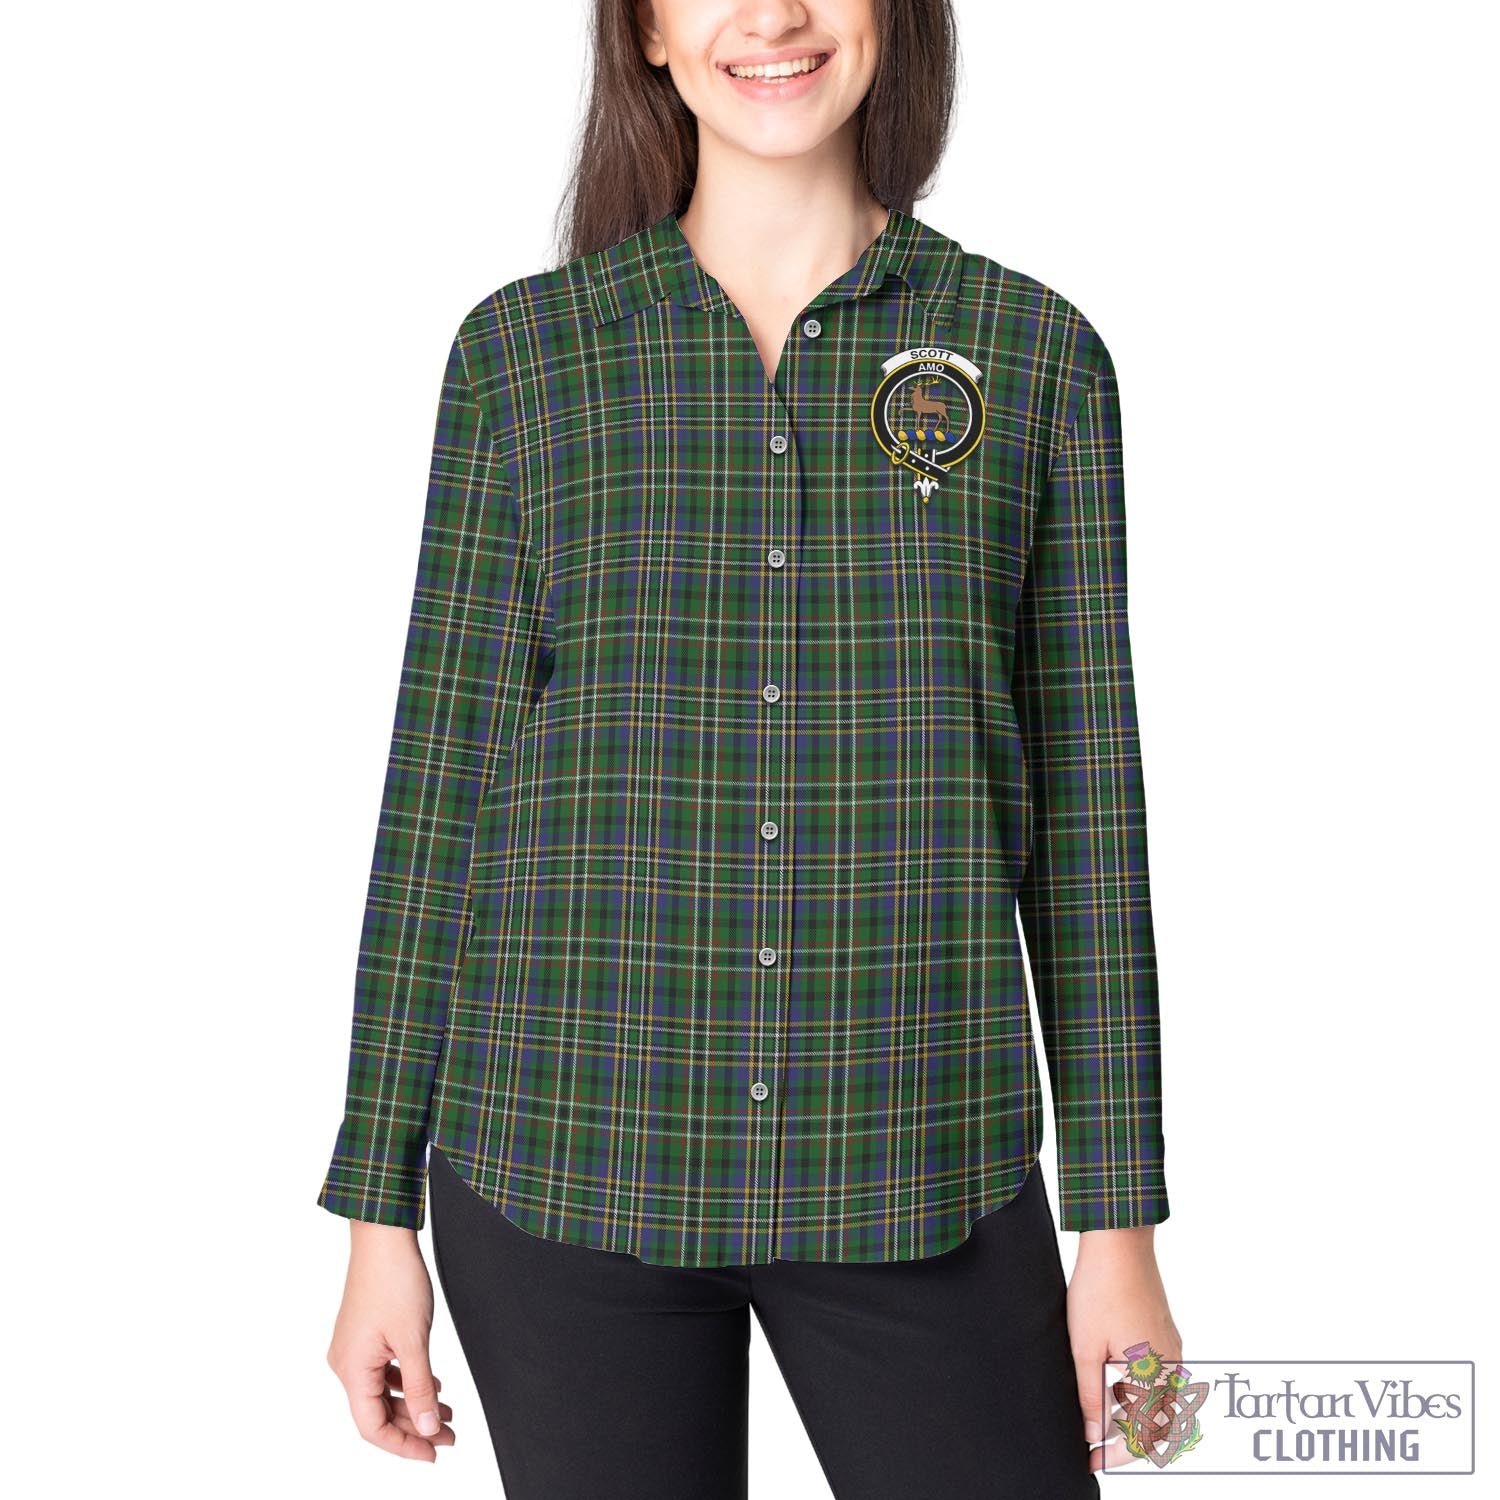 Tartan Vibes Clothing Scott Green Tartan Womens Casual Shirt with Family Crest